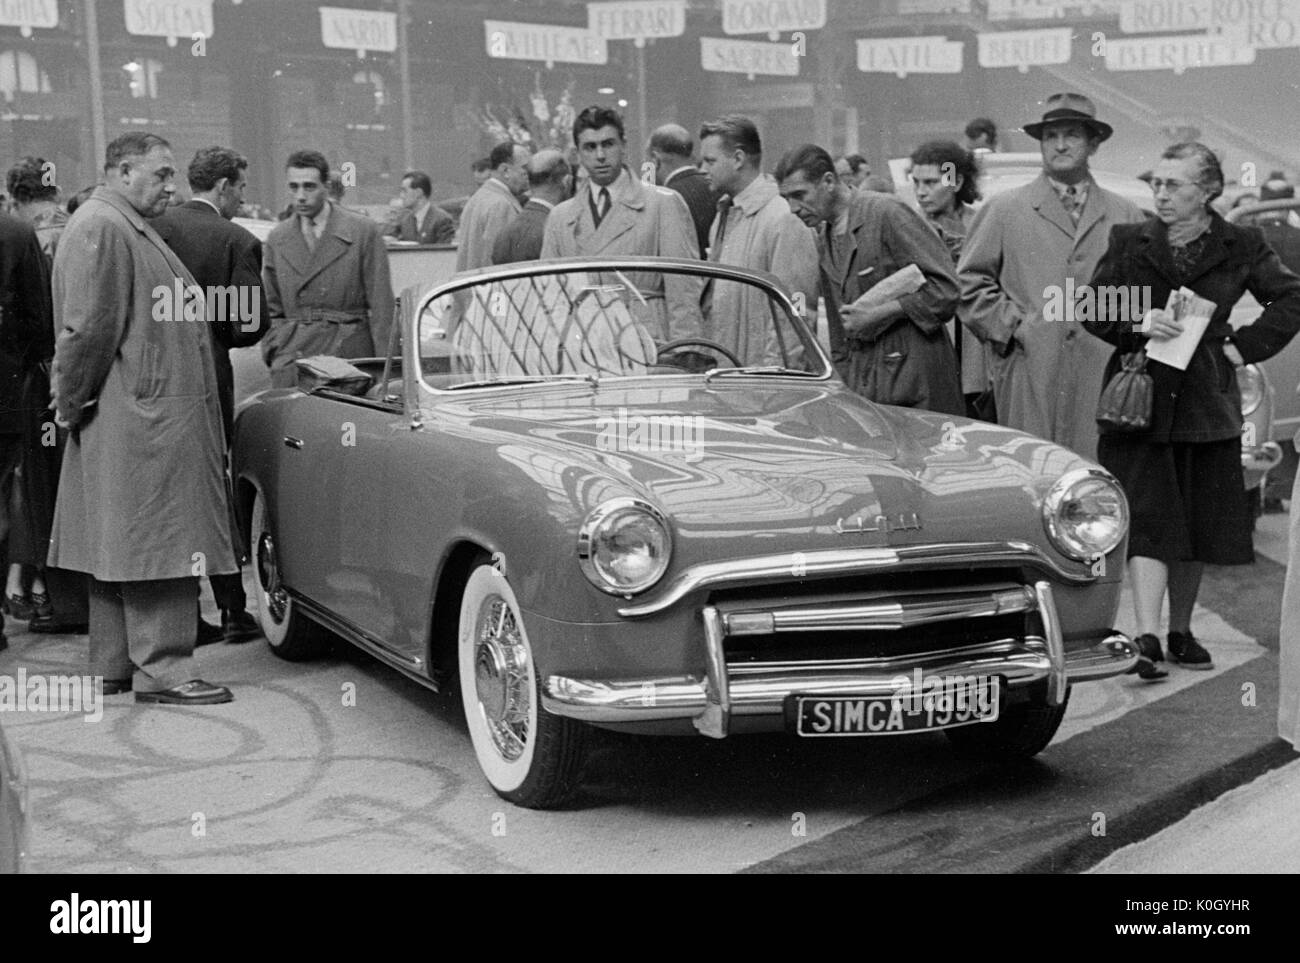 1953 Simca 8 sport Stock Photo - Alamy